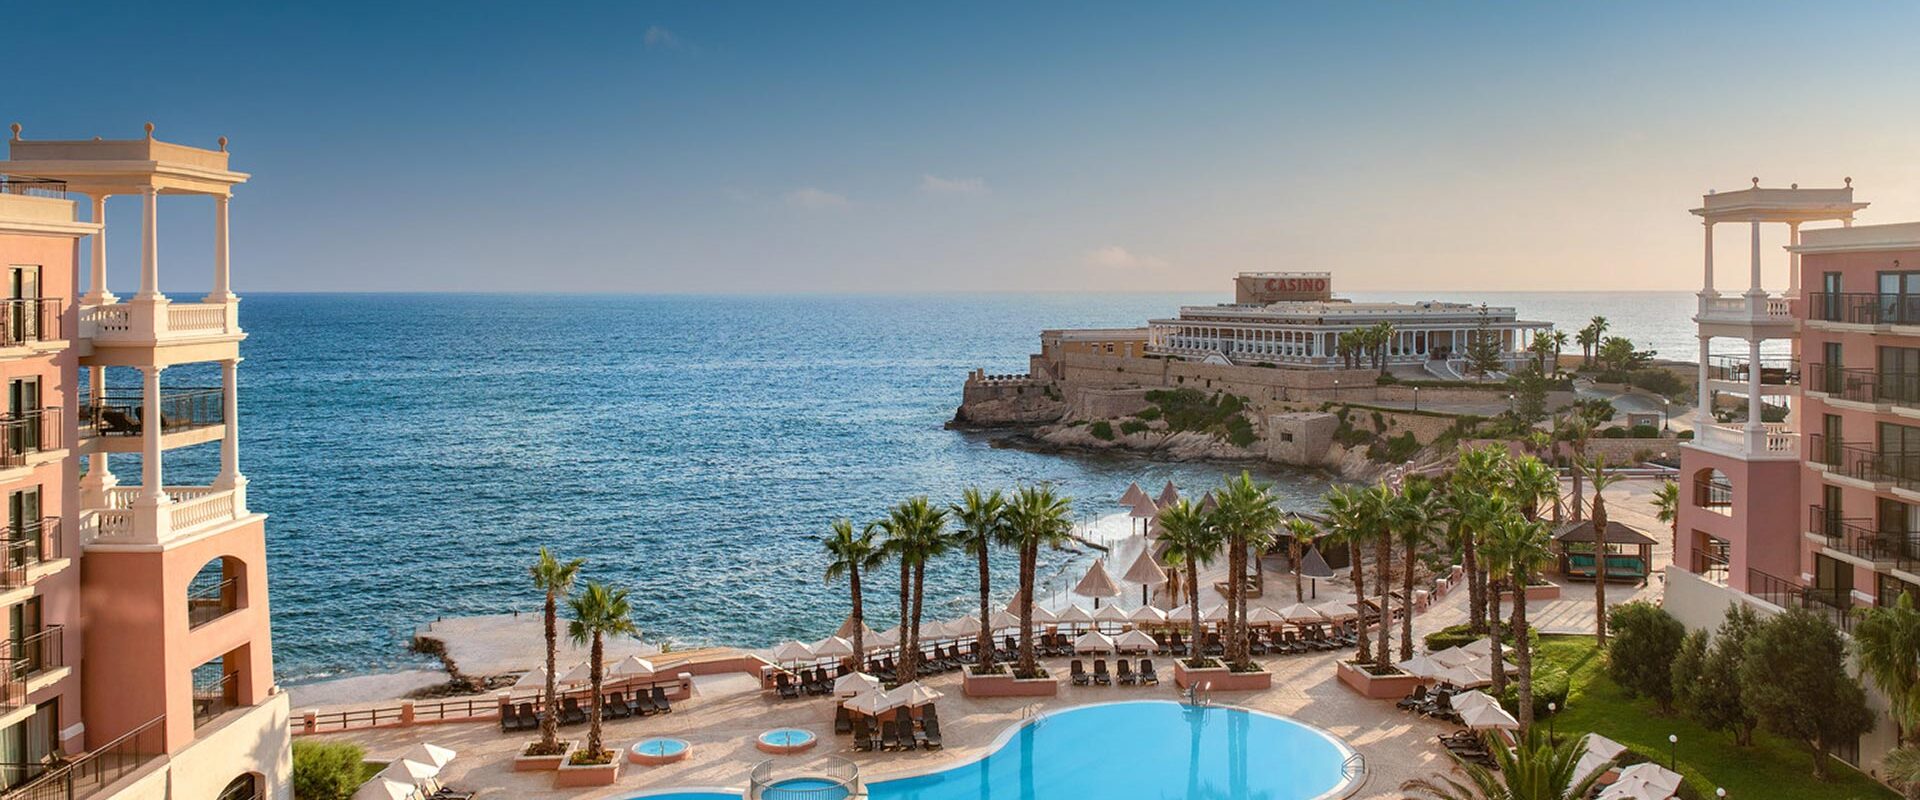 ocean-side exterior of the Westin Dragonara Resort in Malta